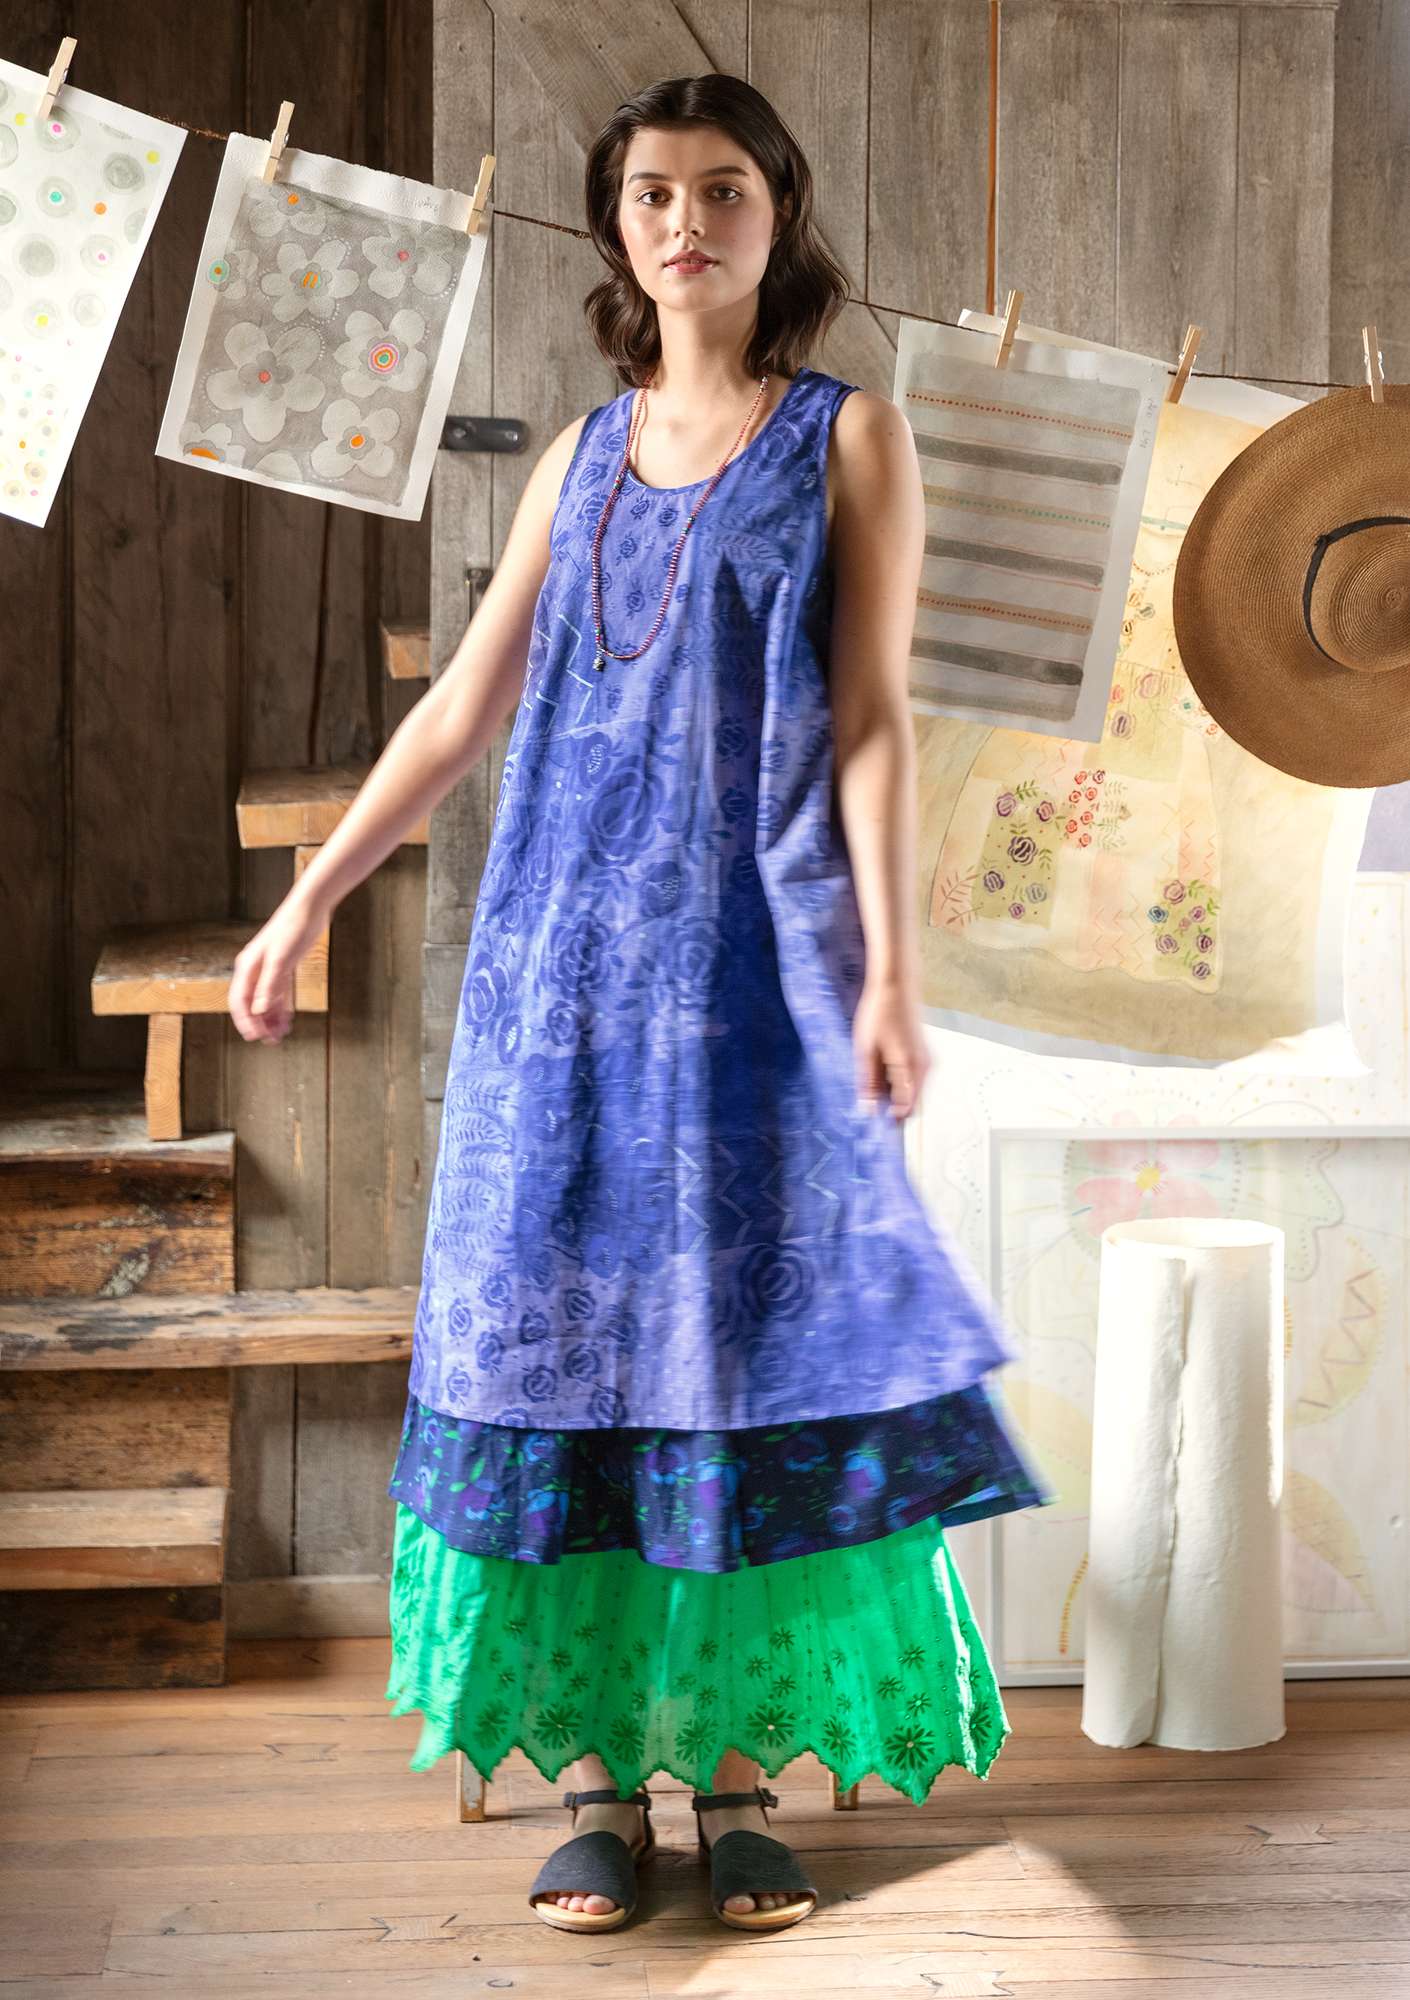 “Rosewood” sleeveless woven dress in organic cotton lupin